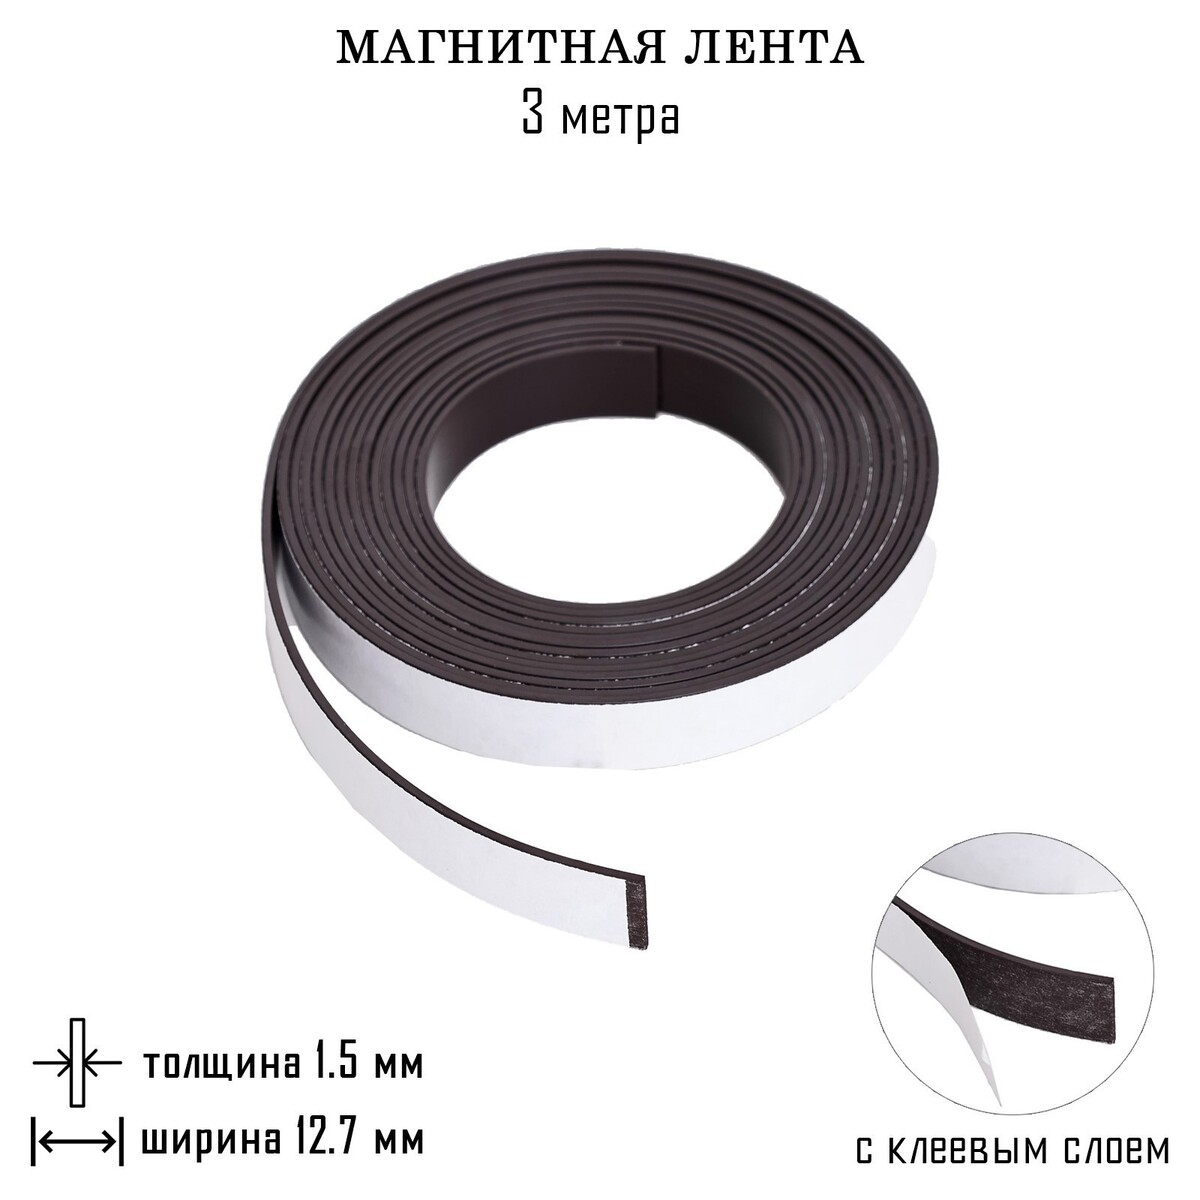 Магнитная лента, с клеевым слоем, 3 метра, толщина 1.5 мм, ширина 12.7 мм лента для углов 2 м ширина 2 3 см